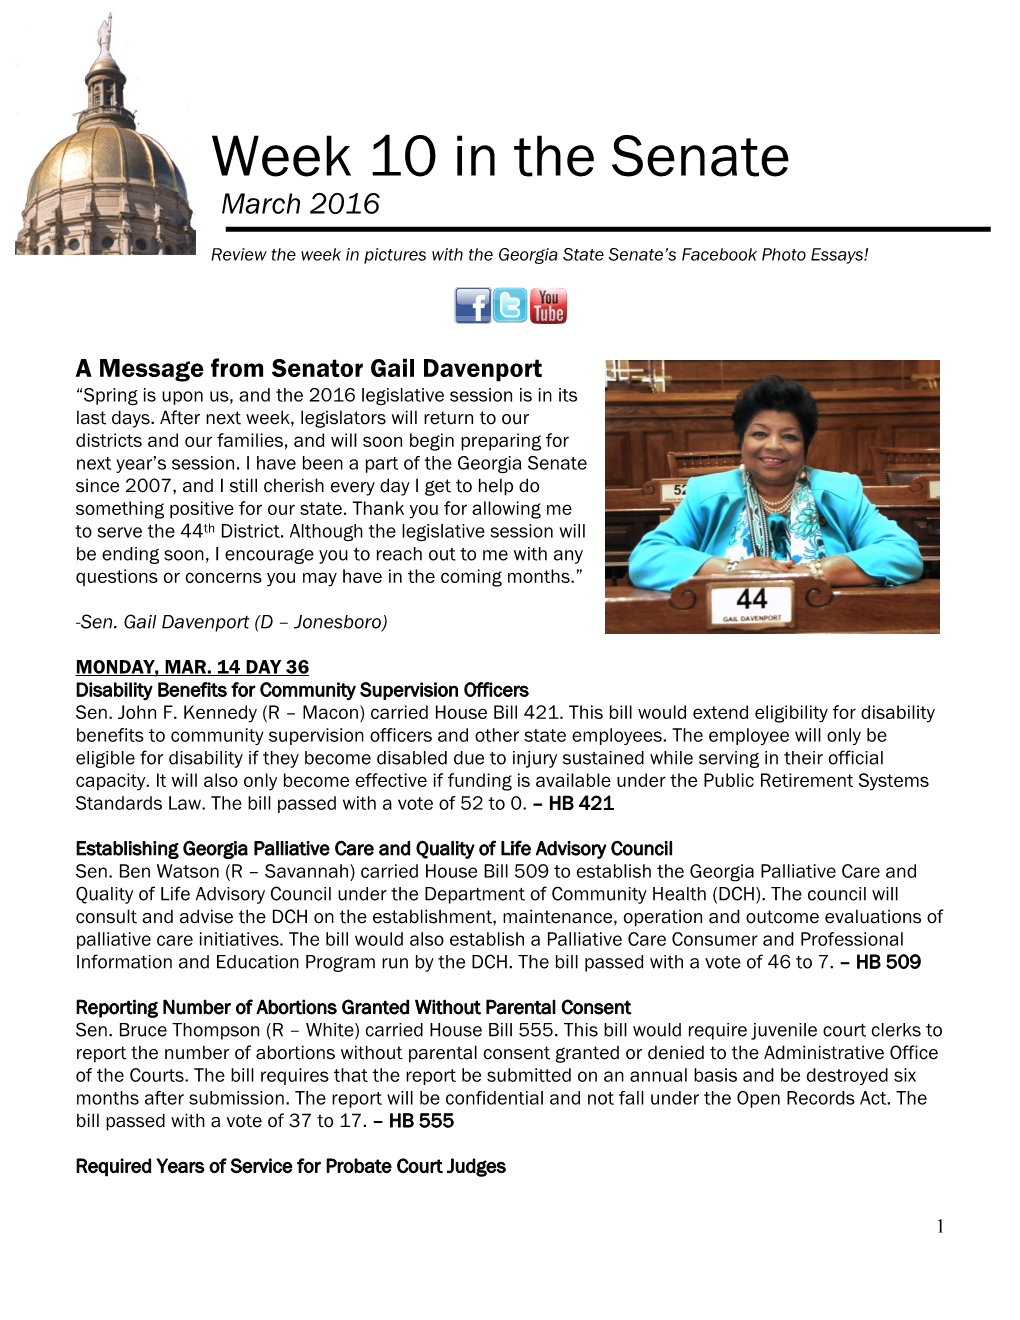 Week 10 in the Senate March 2016